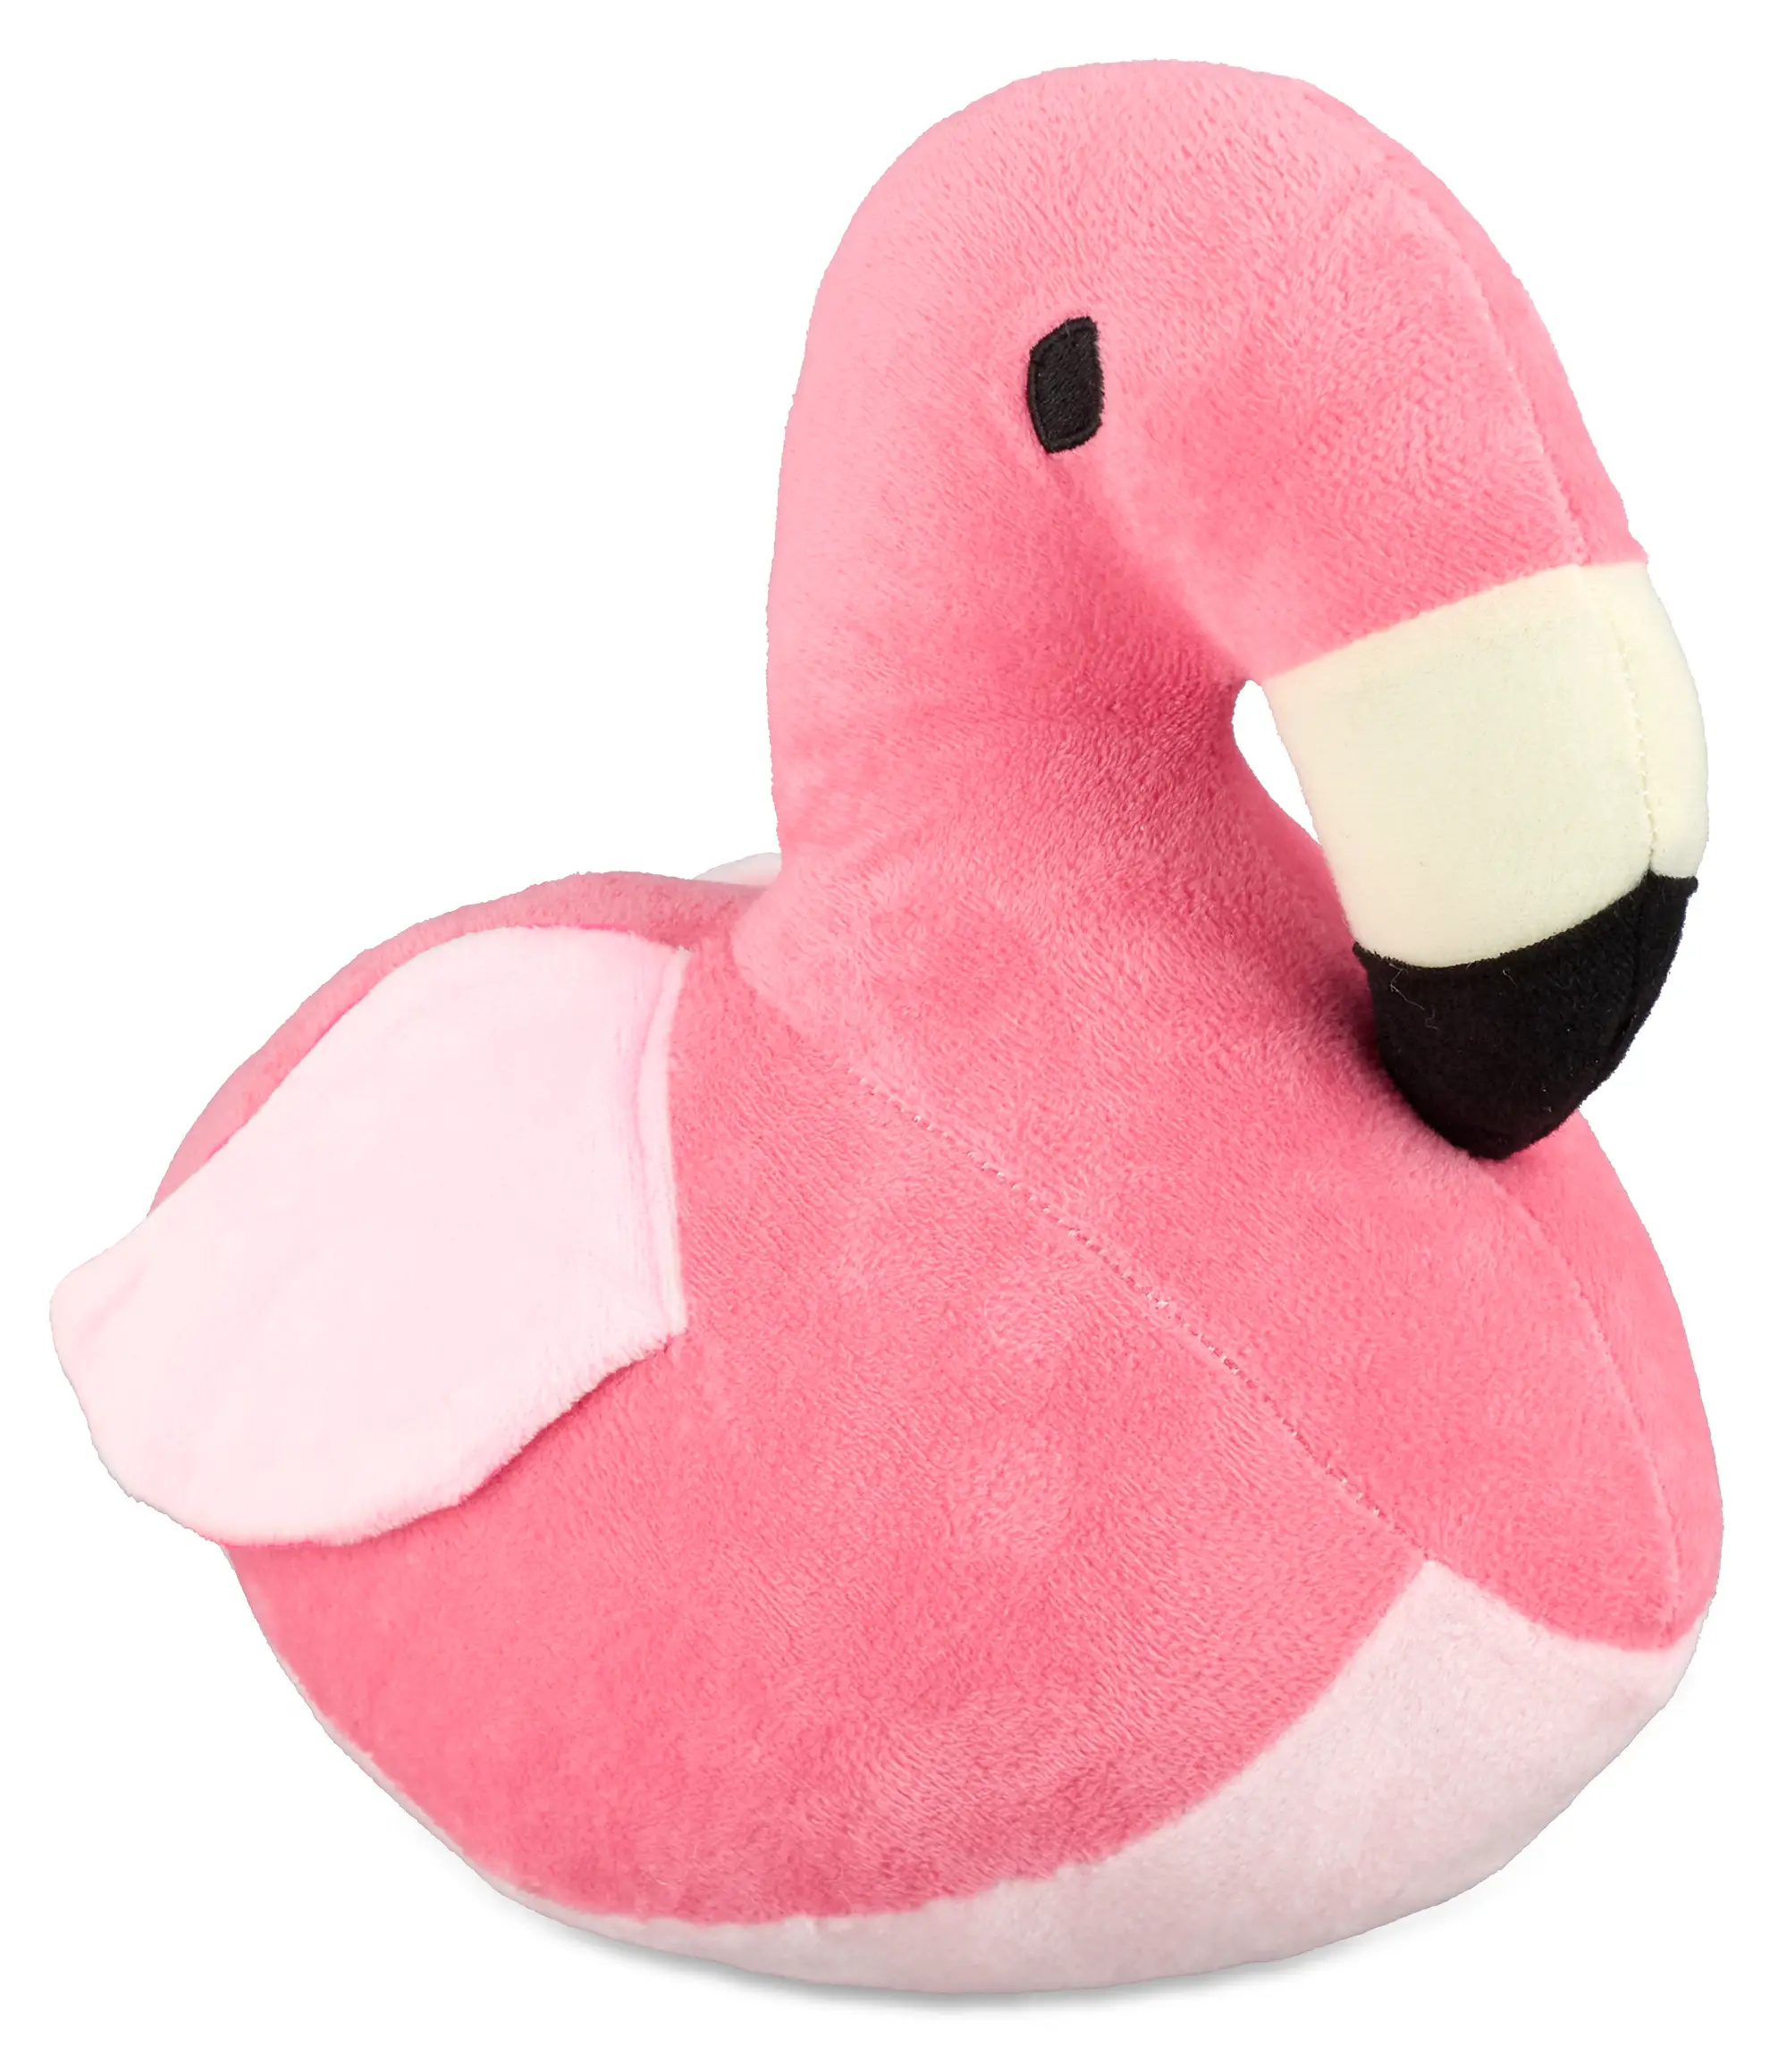 Flamingo T眉rstopper